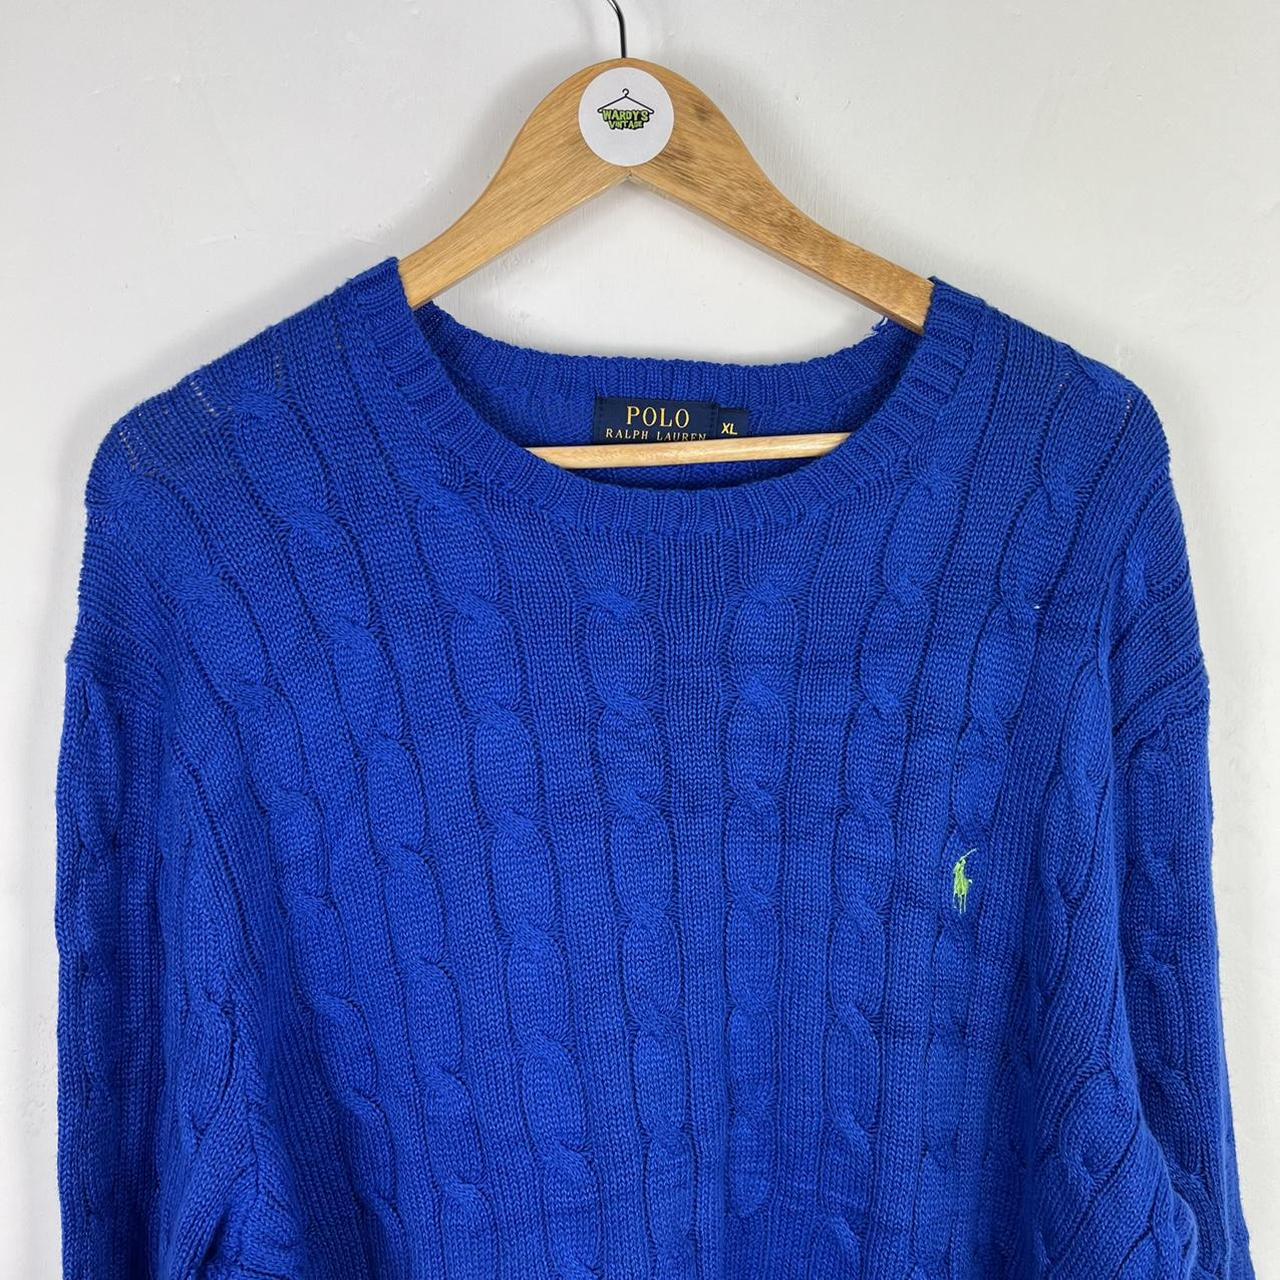 Ralph Lauren knitted sweatshirt XL